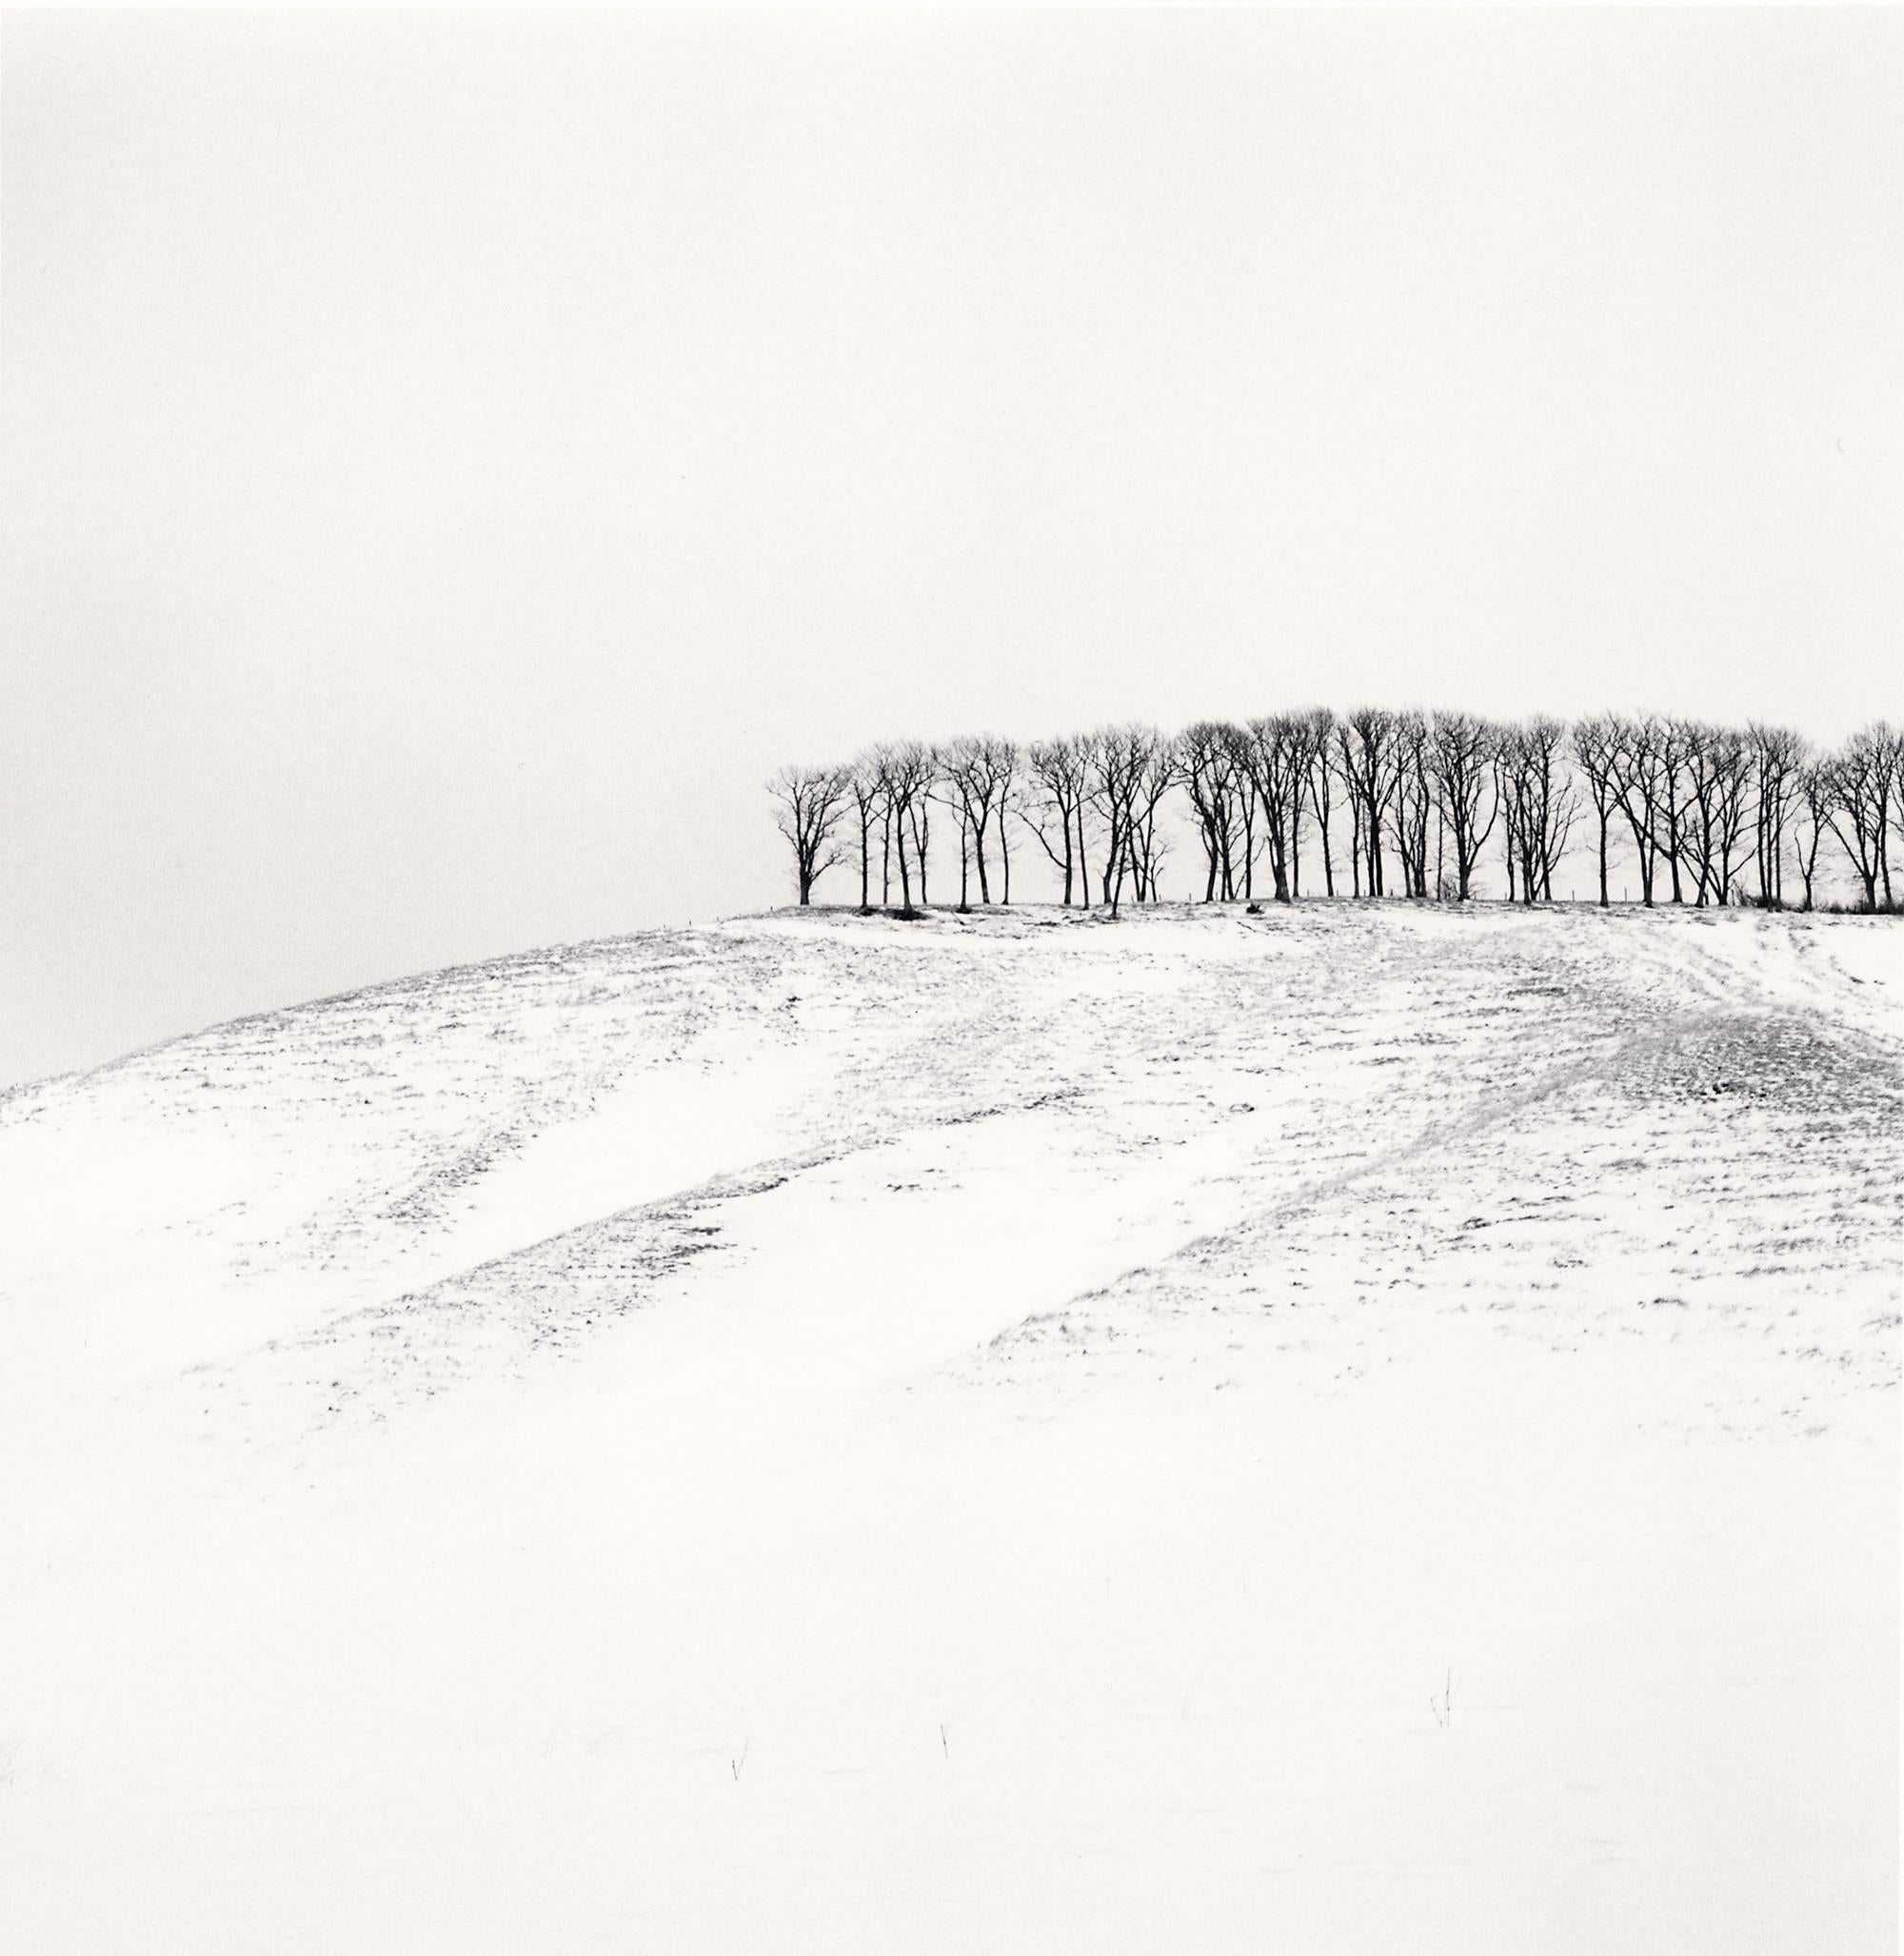 Michael Kenna Black and White Photograph - Hilltop Trees, Study 4, Teshikaga, Hokkaido, Japan